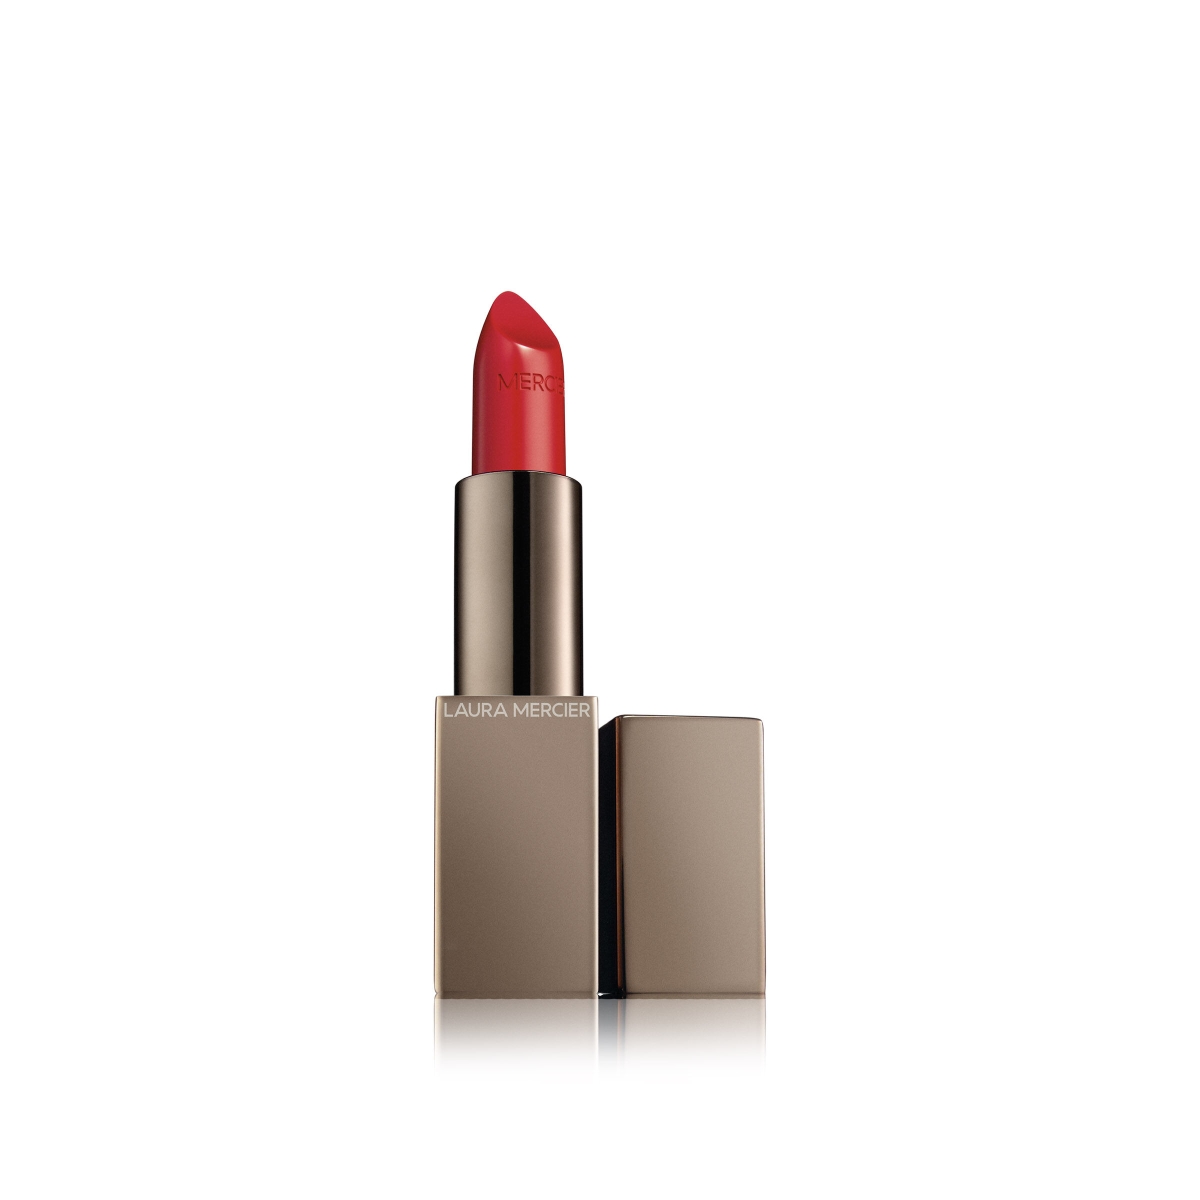 241436 0.12 Oz Rouge Essentiel Silky Creme Lipstick - No.rouge Eclatant Bright Red